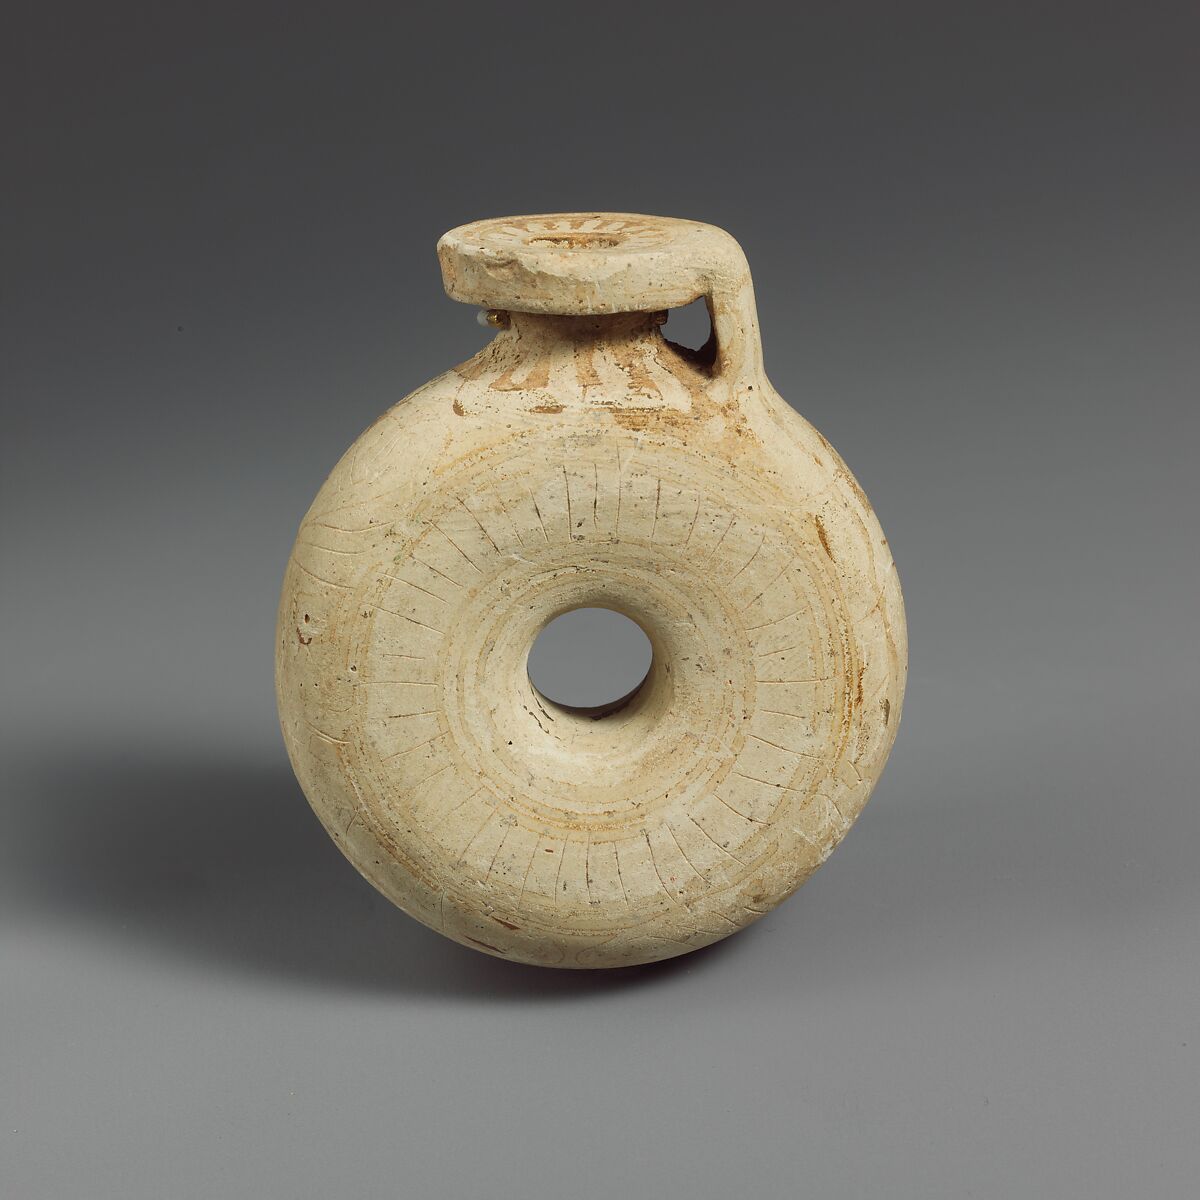 Terracotta ring aryballos (perfume vase), Terracotta, Greek, Corinthian 